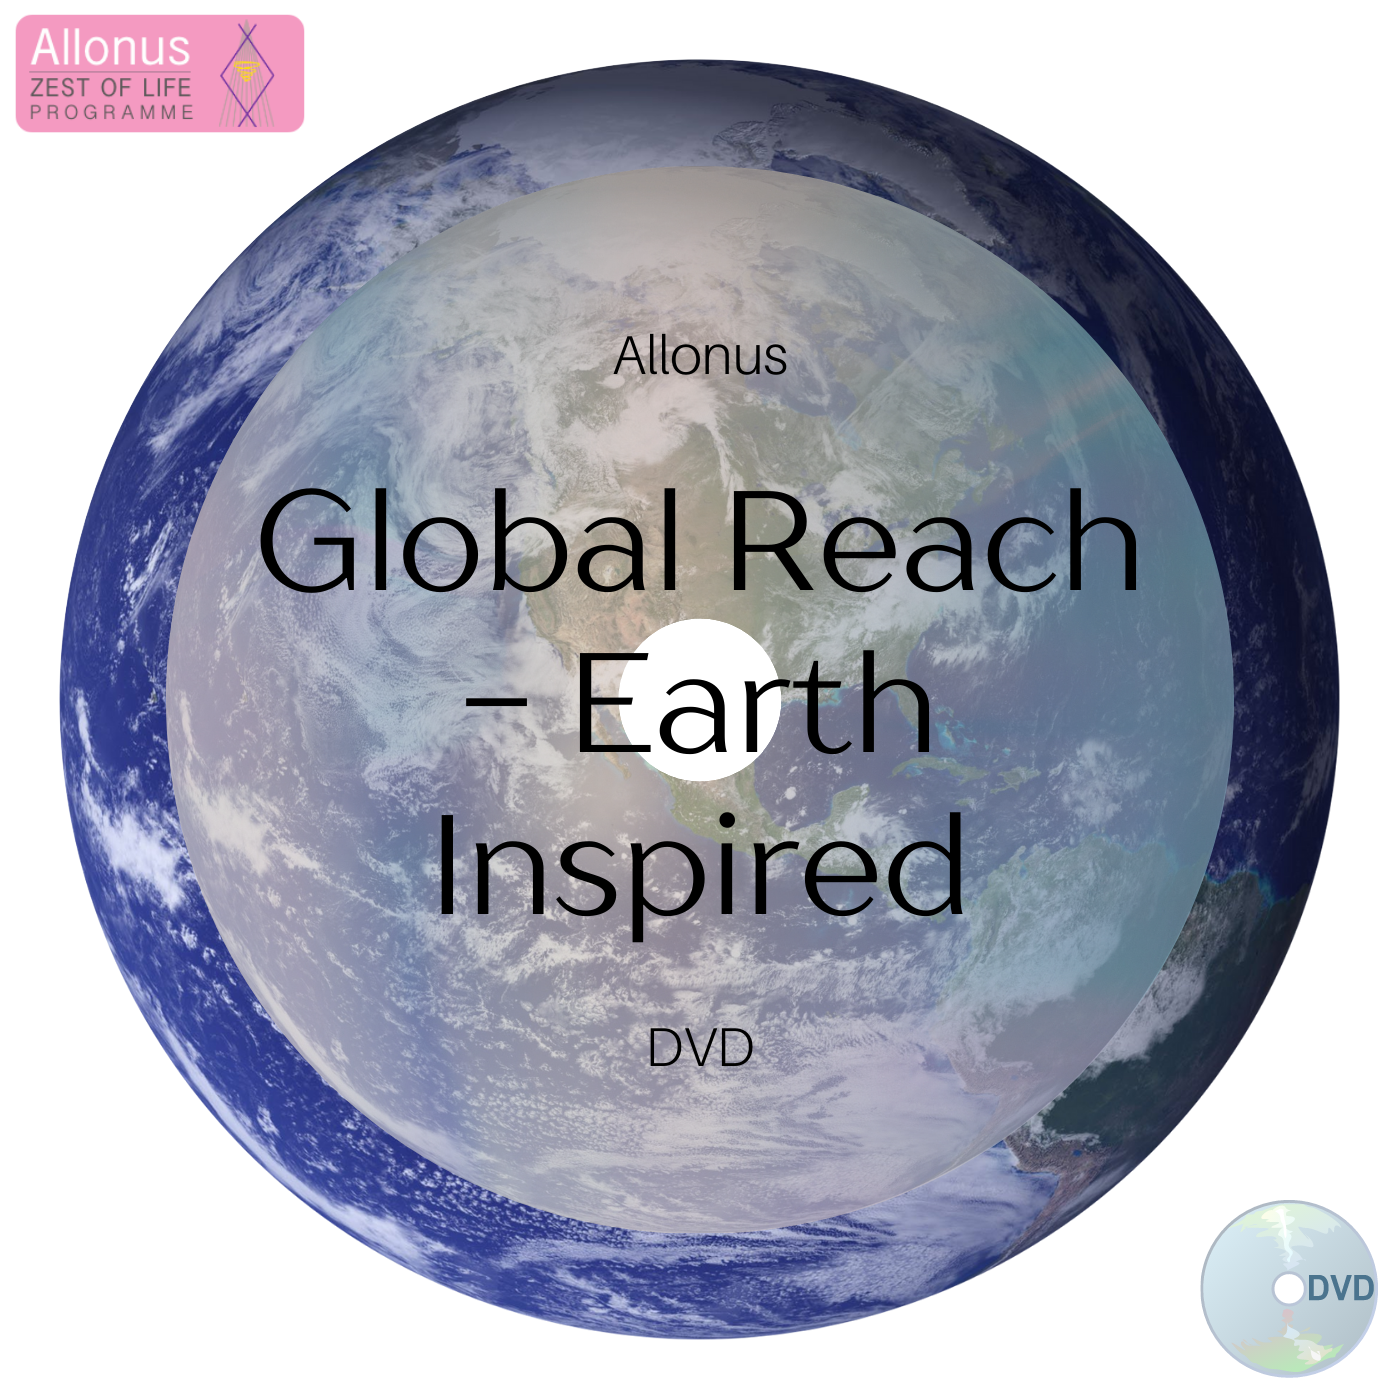 Global Reach - Earth Inspired DVD